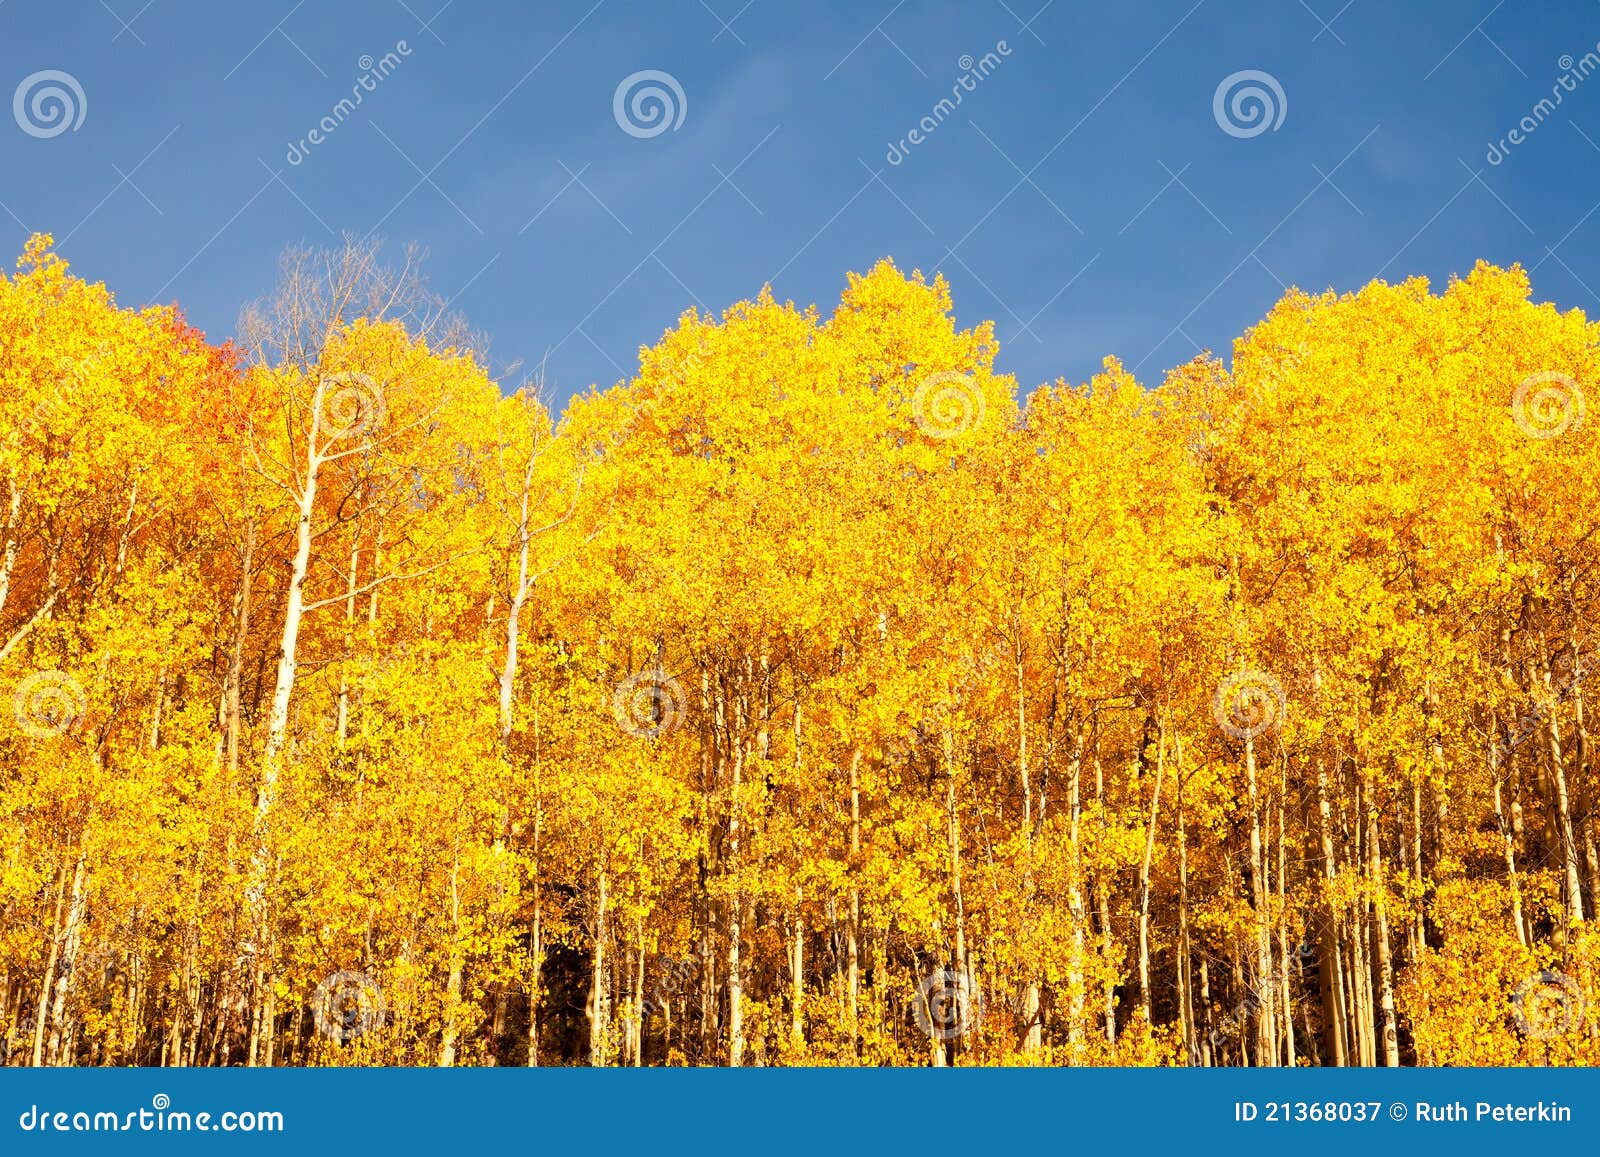 american aspen trees